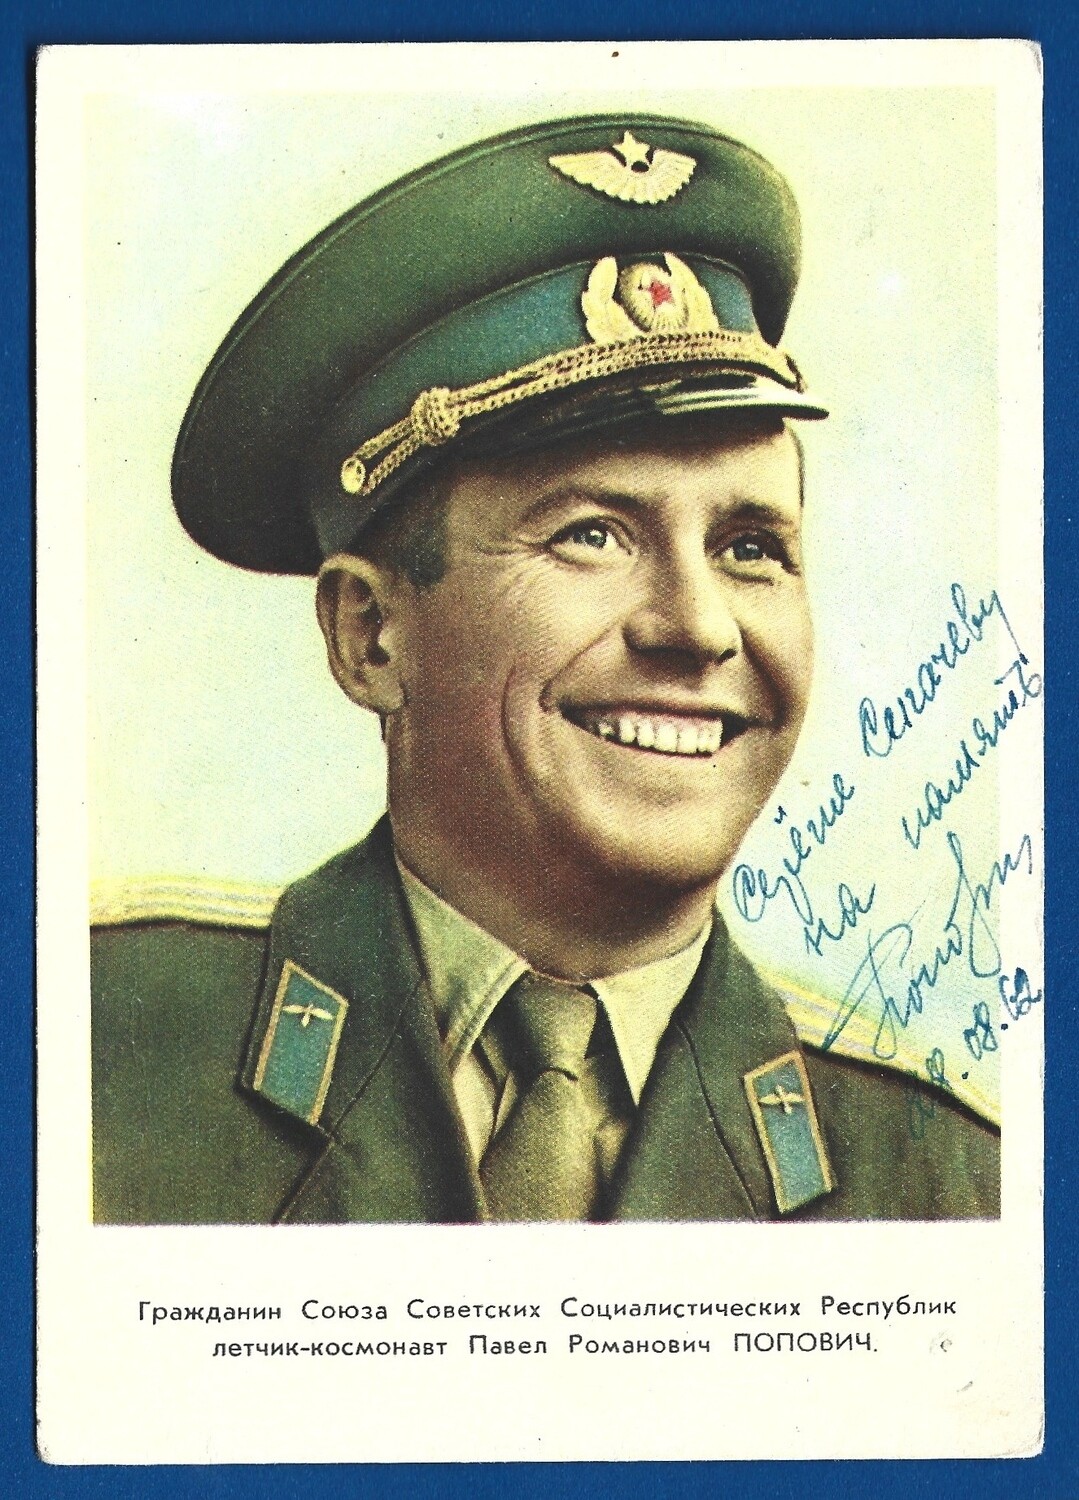 Pavel Popovich Soviet cosmonaut signed postcard